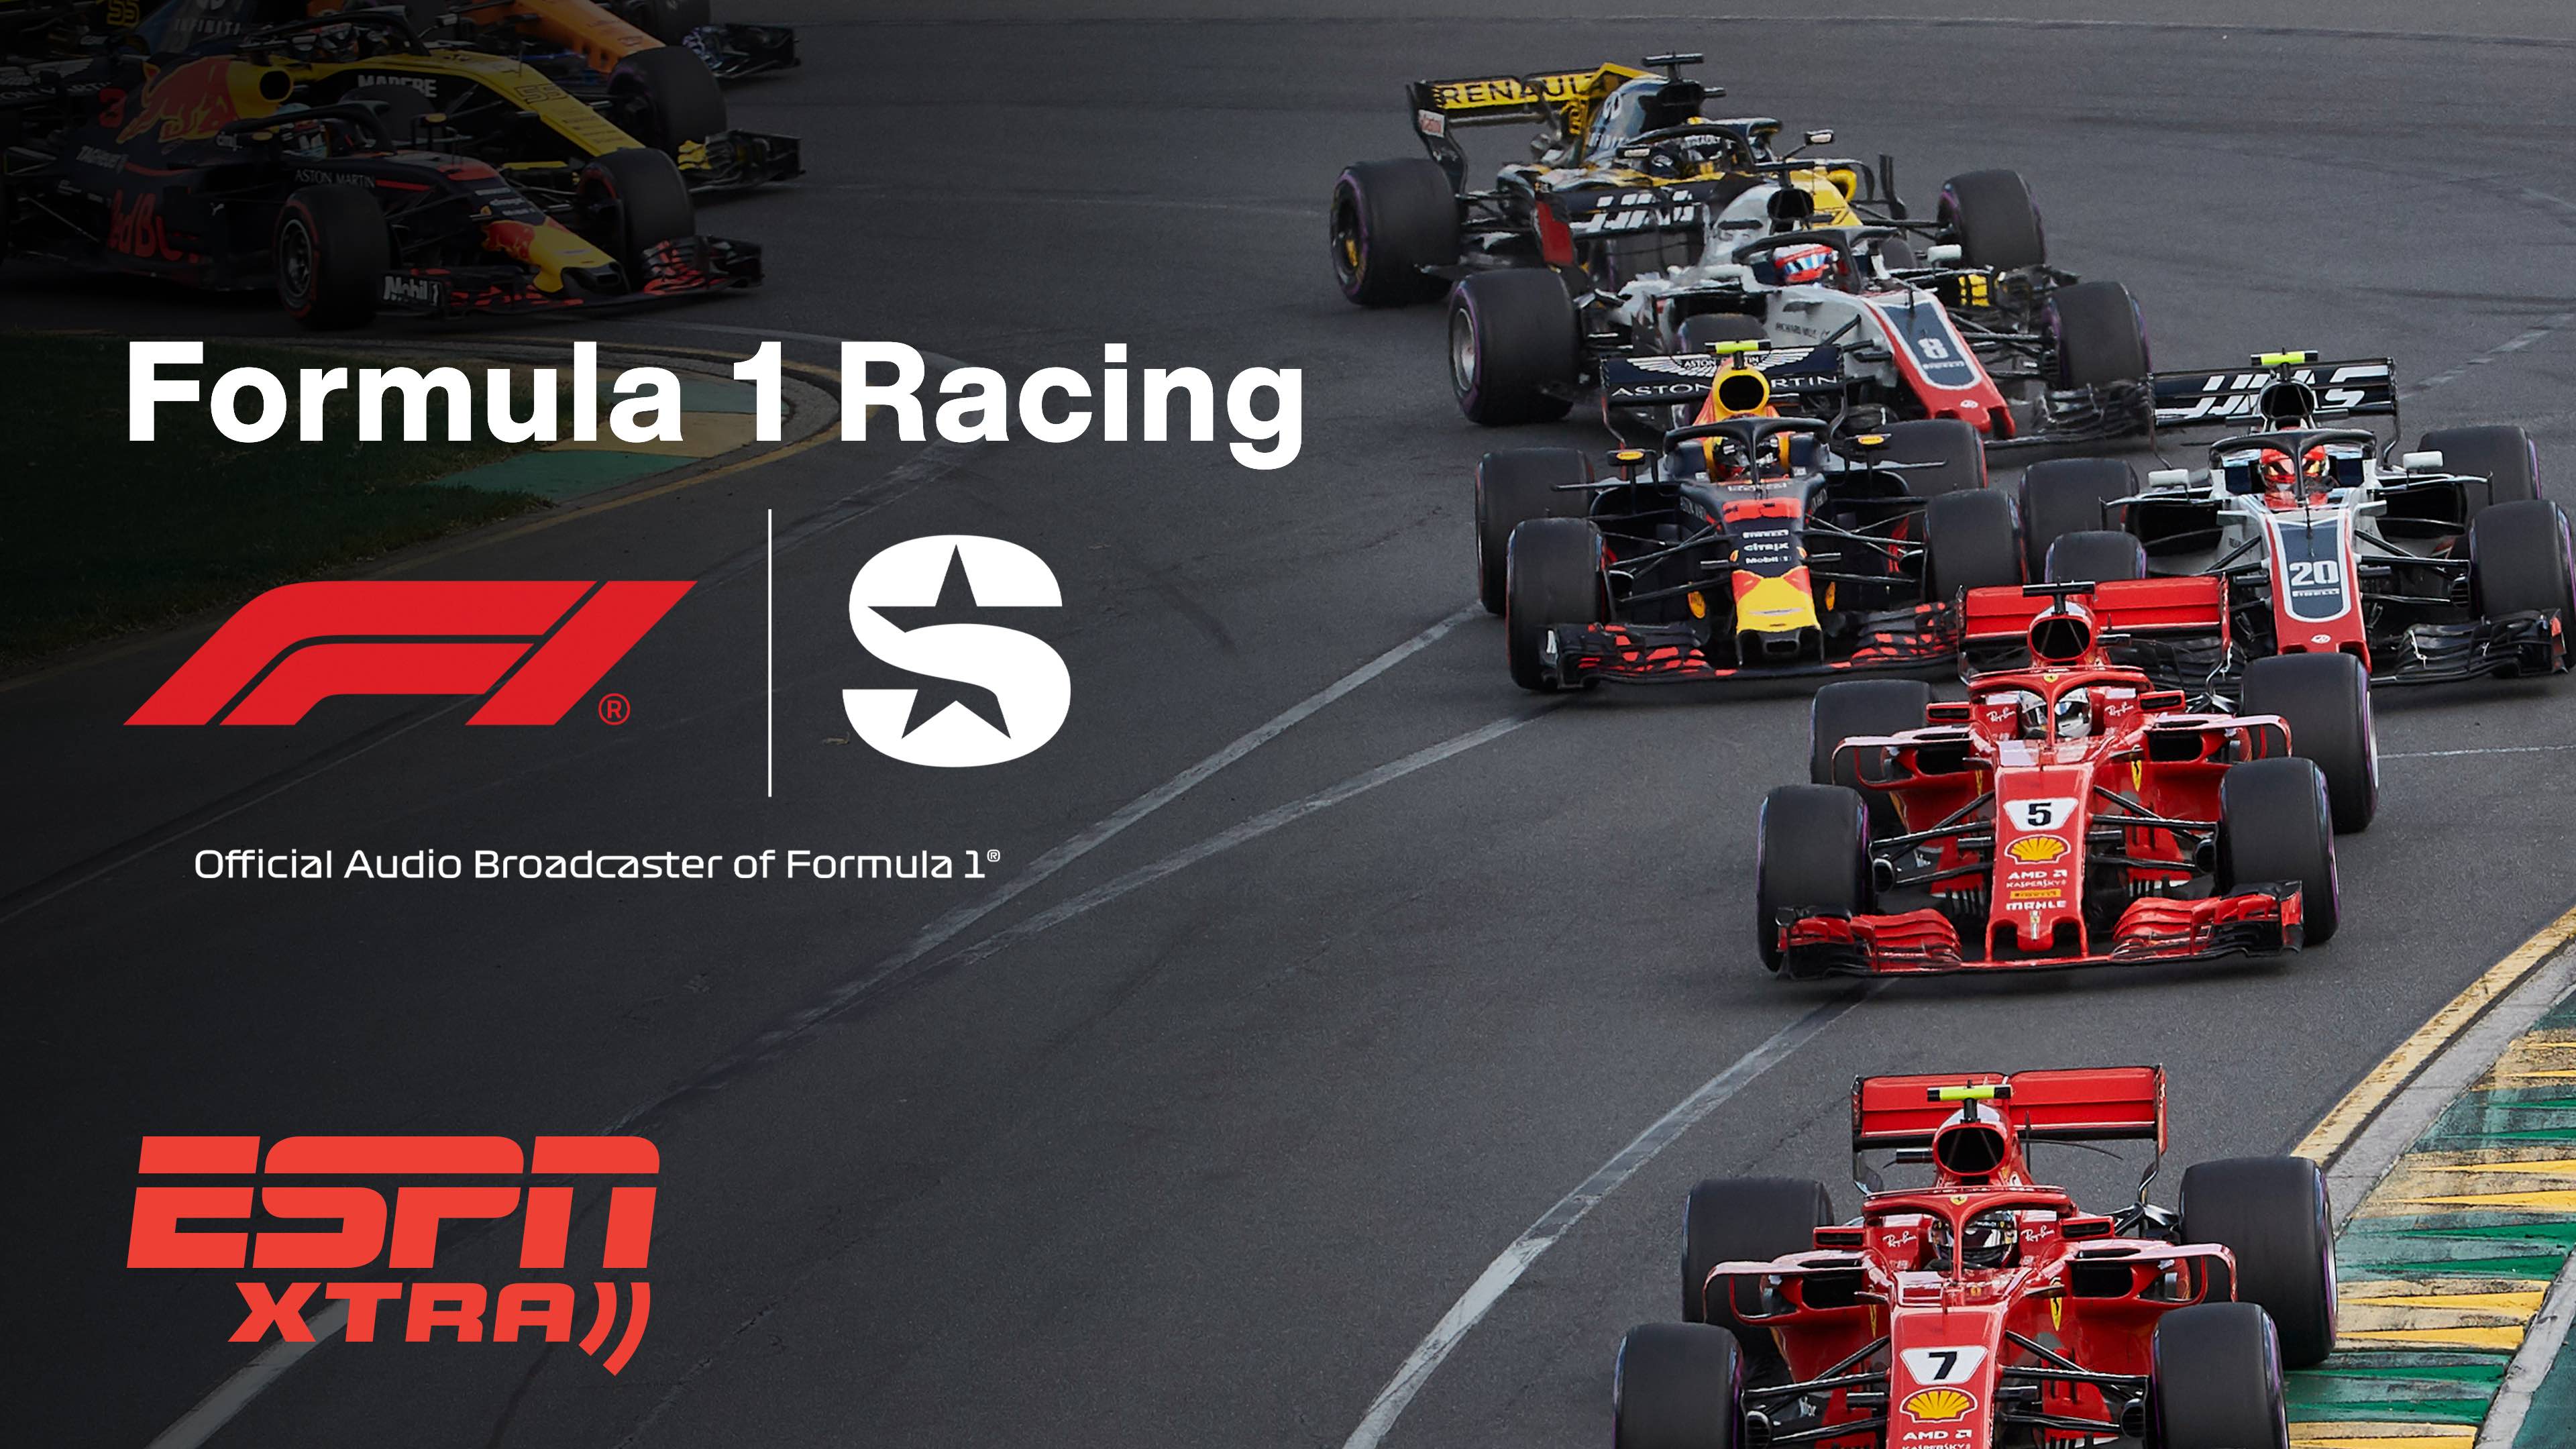 Formula 1 Racing on SiriusXM's ESPN Xtra Channel